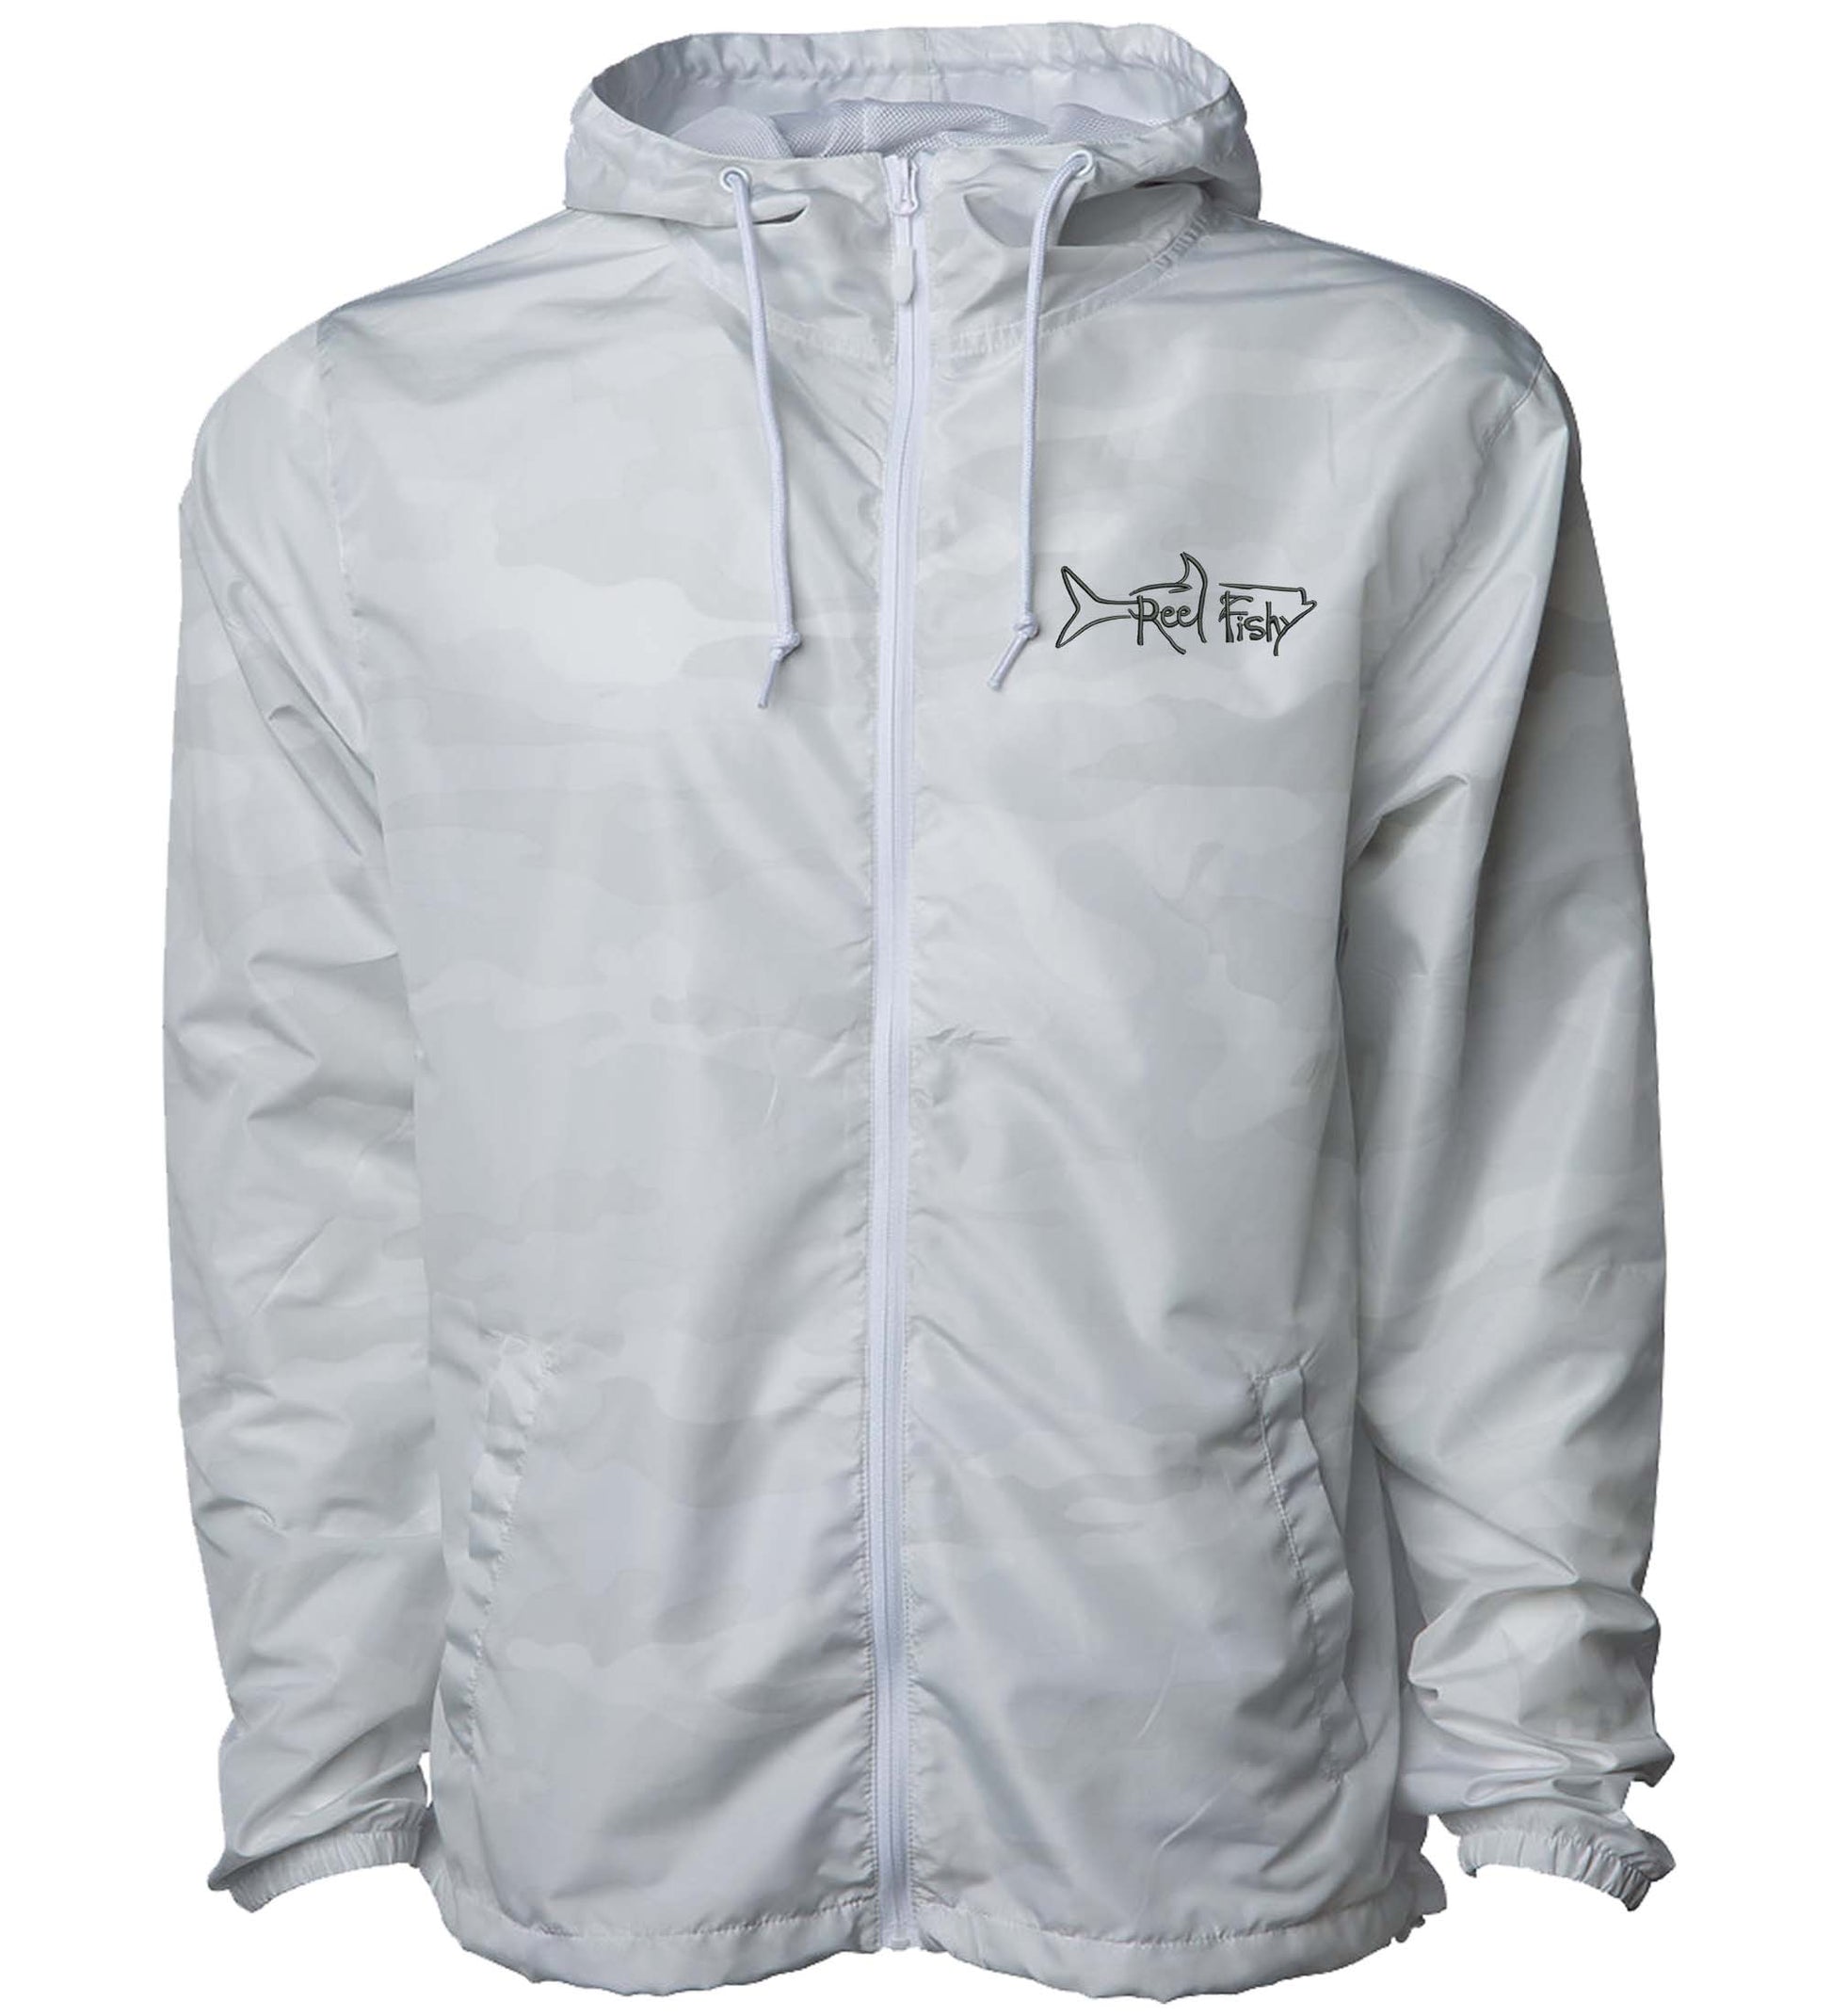 White Camo Lightweight Windbreaker Jacket with Hood - Water Resistant, Full Zip Front Closure